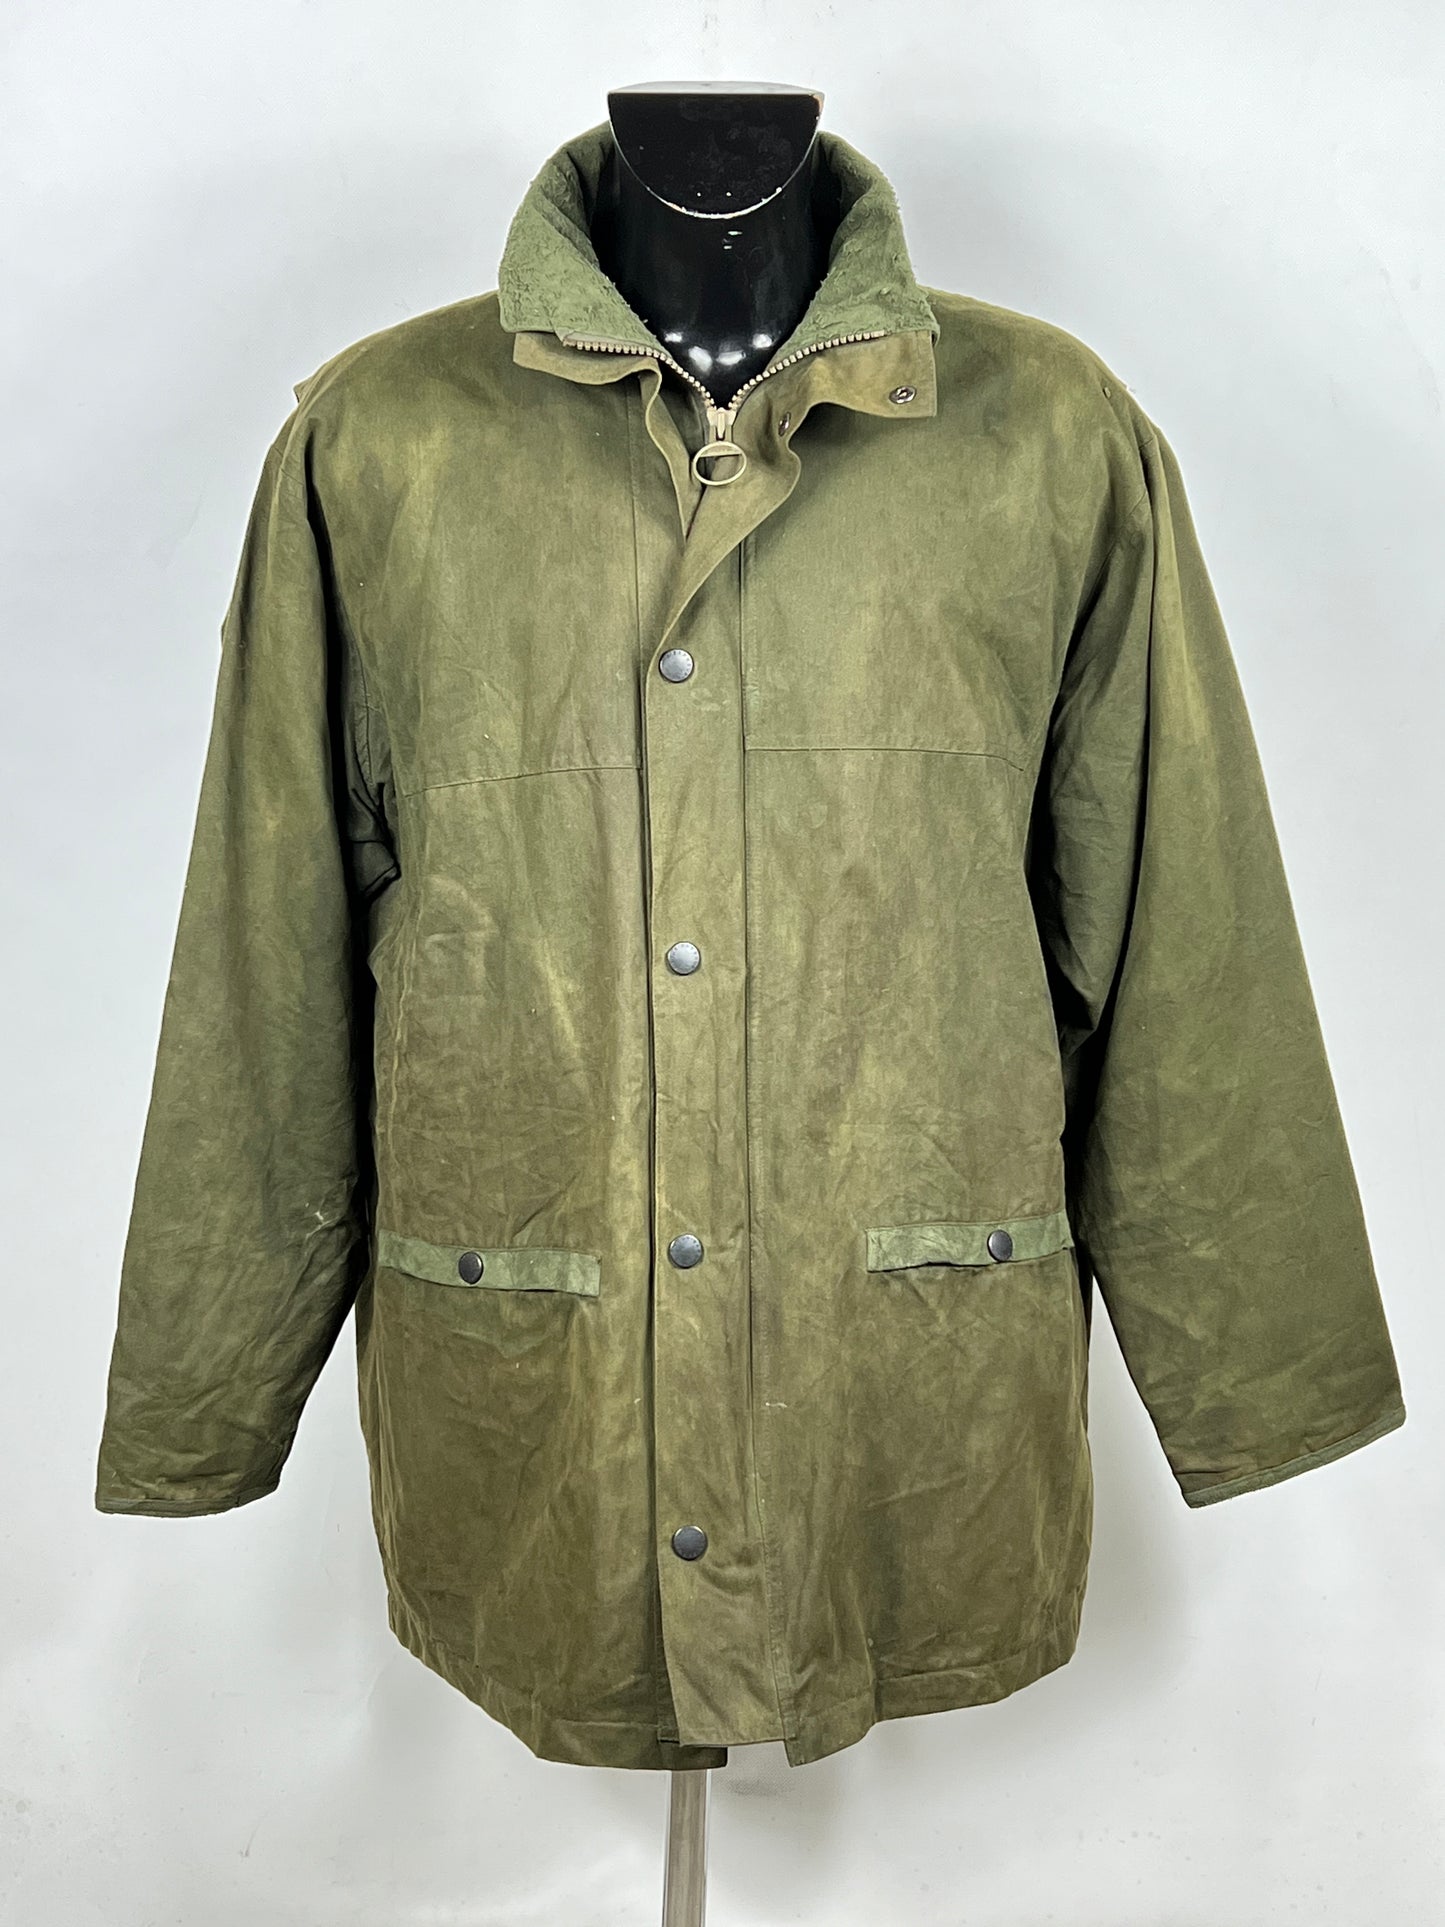 Barbour Giacca Uomo Impermeabile verde Large Trapper Endurance Jacket size L